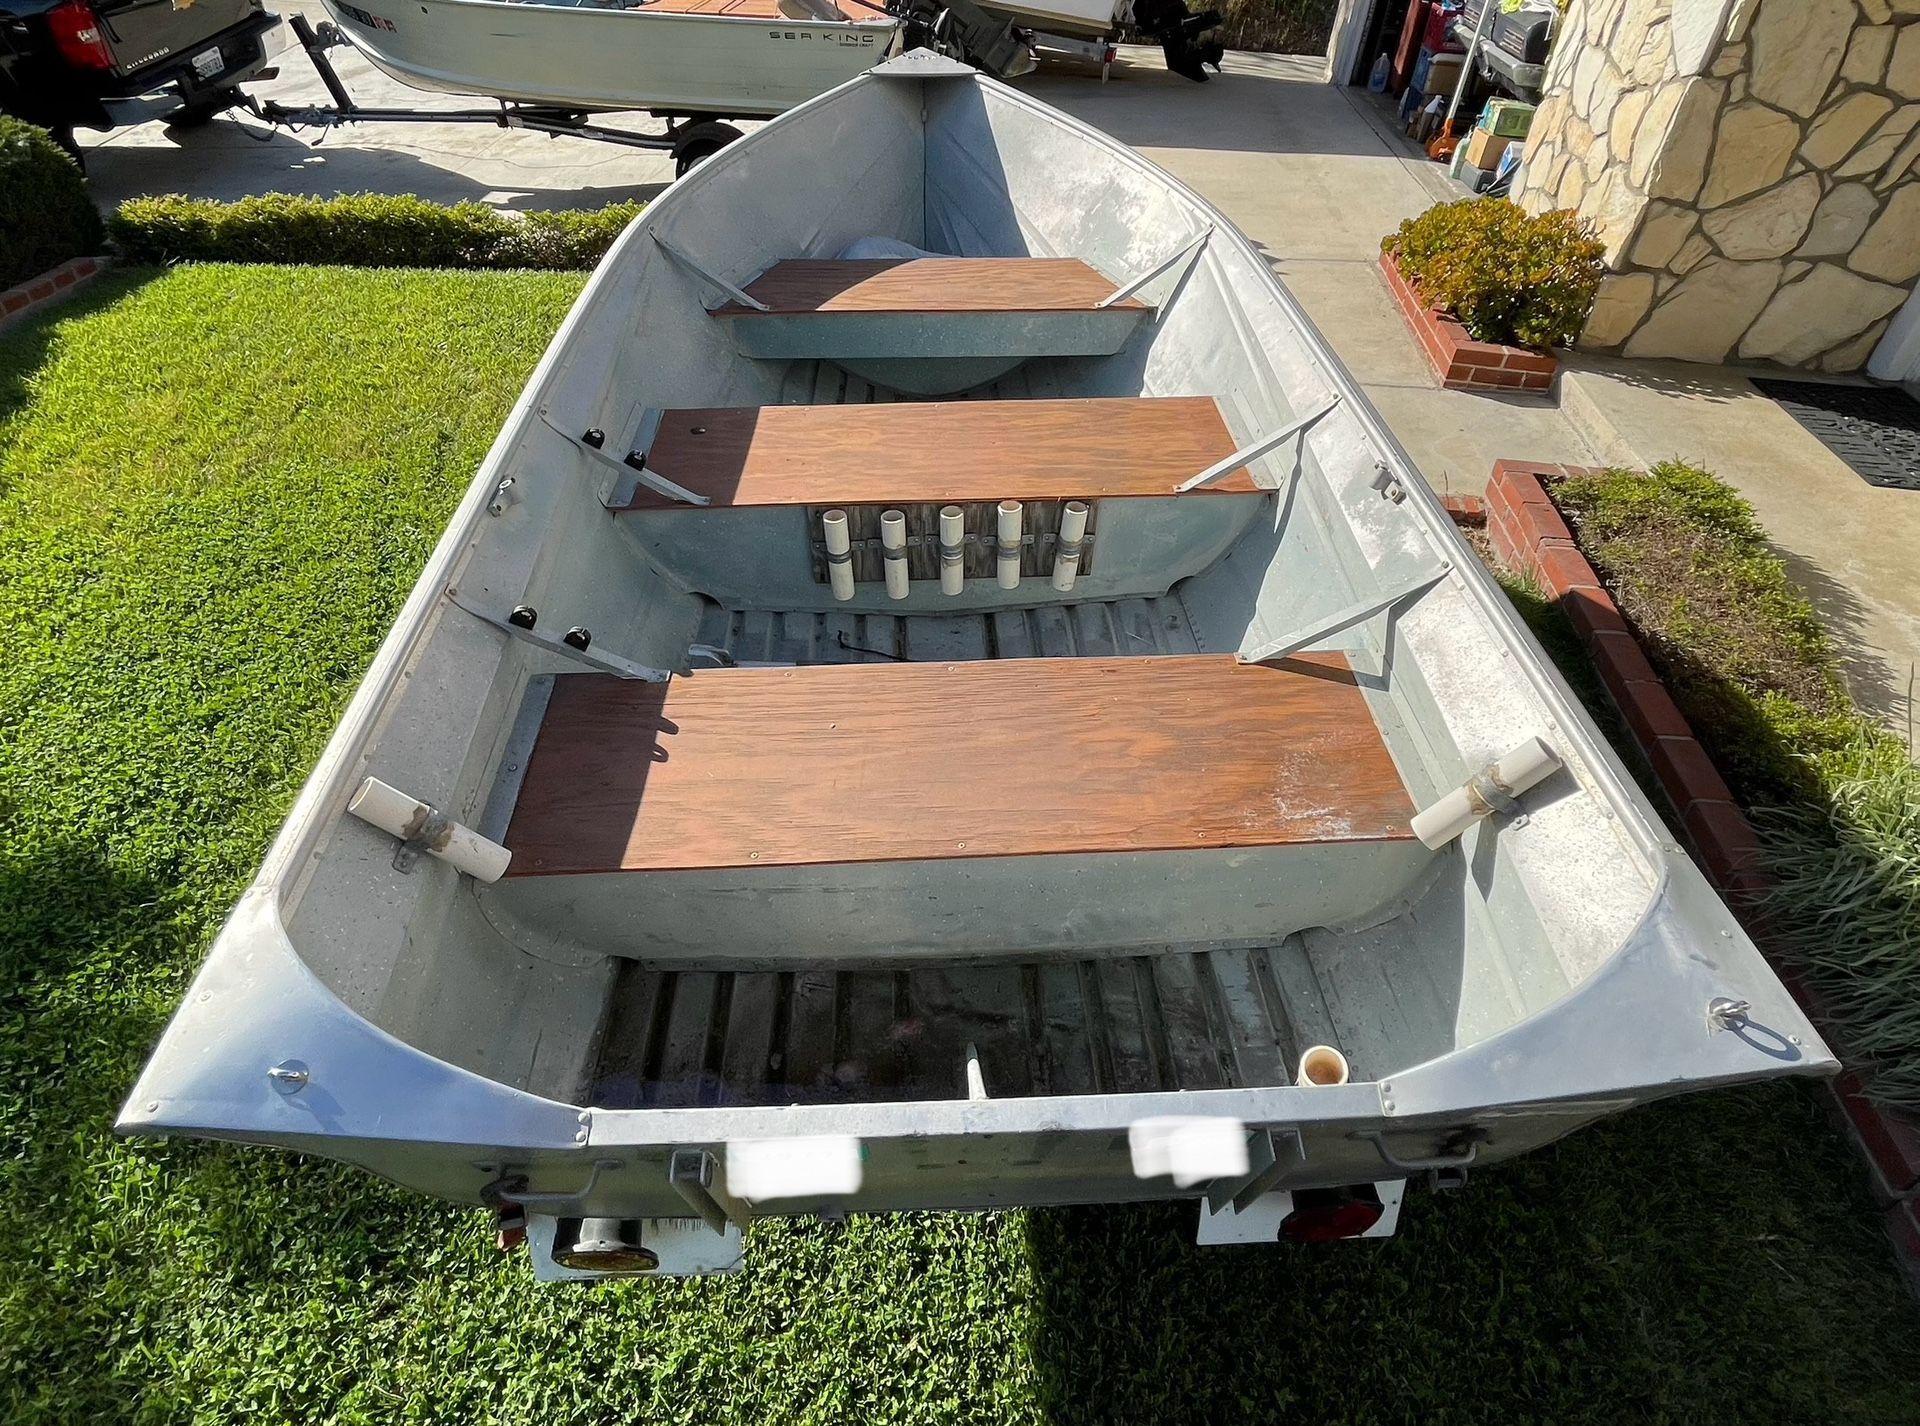 Valco 12’ Aluminum Boat And Trailer